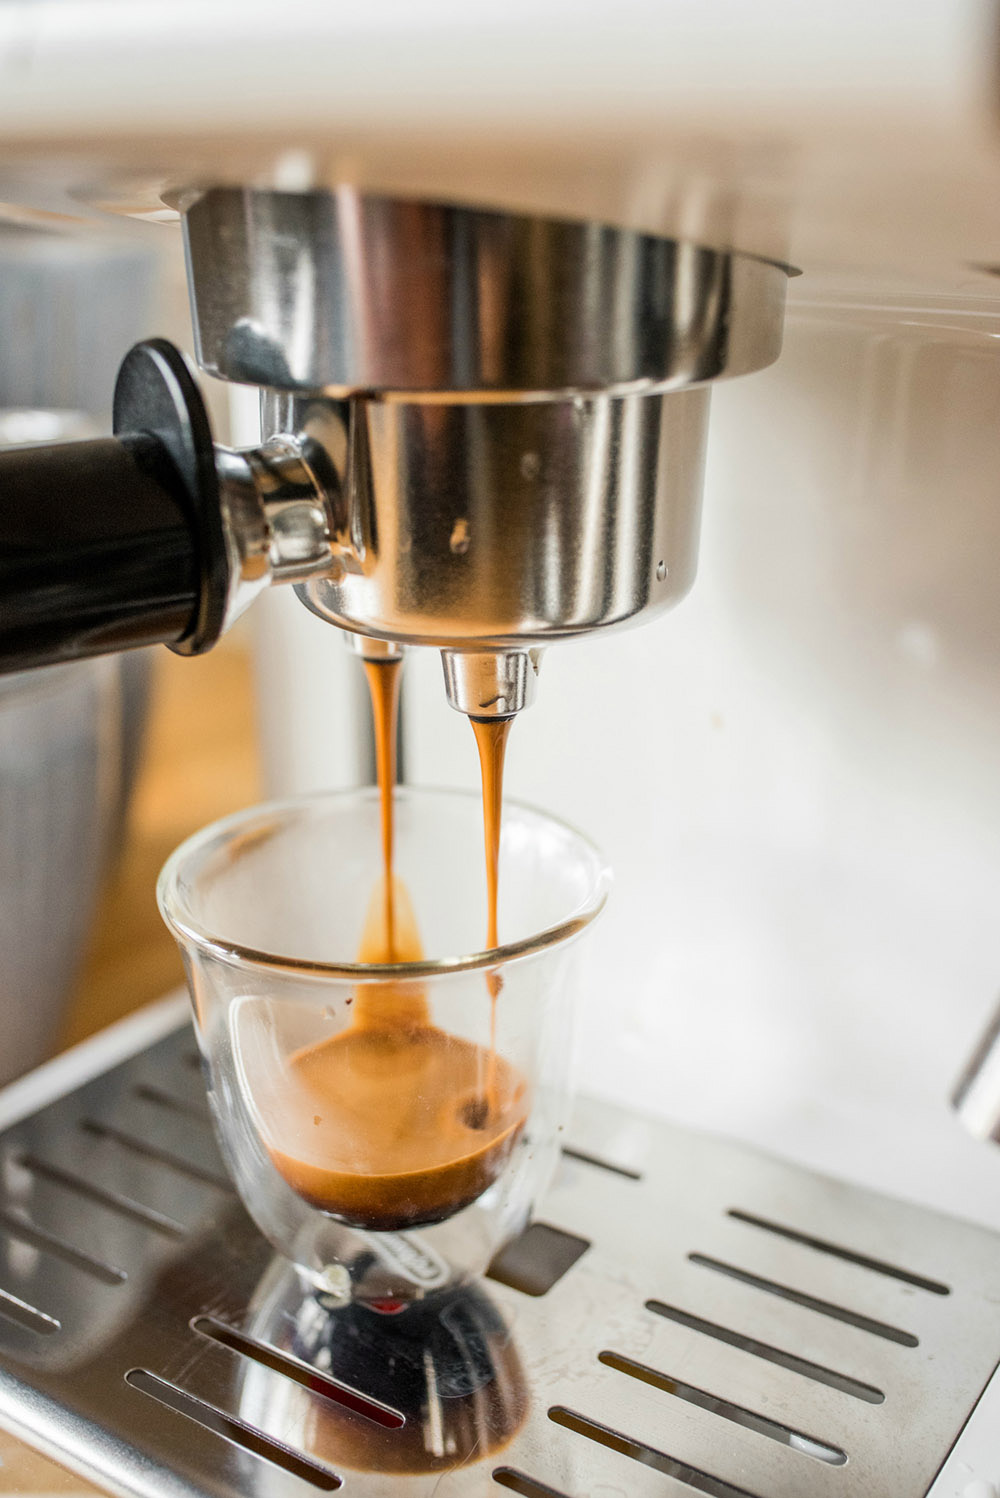 An espresso maker drips espresso into a cup.